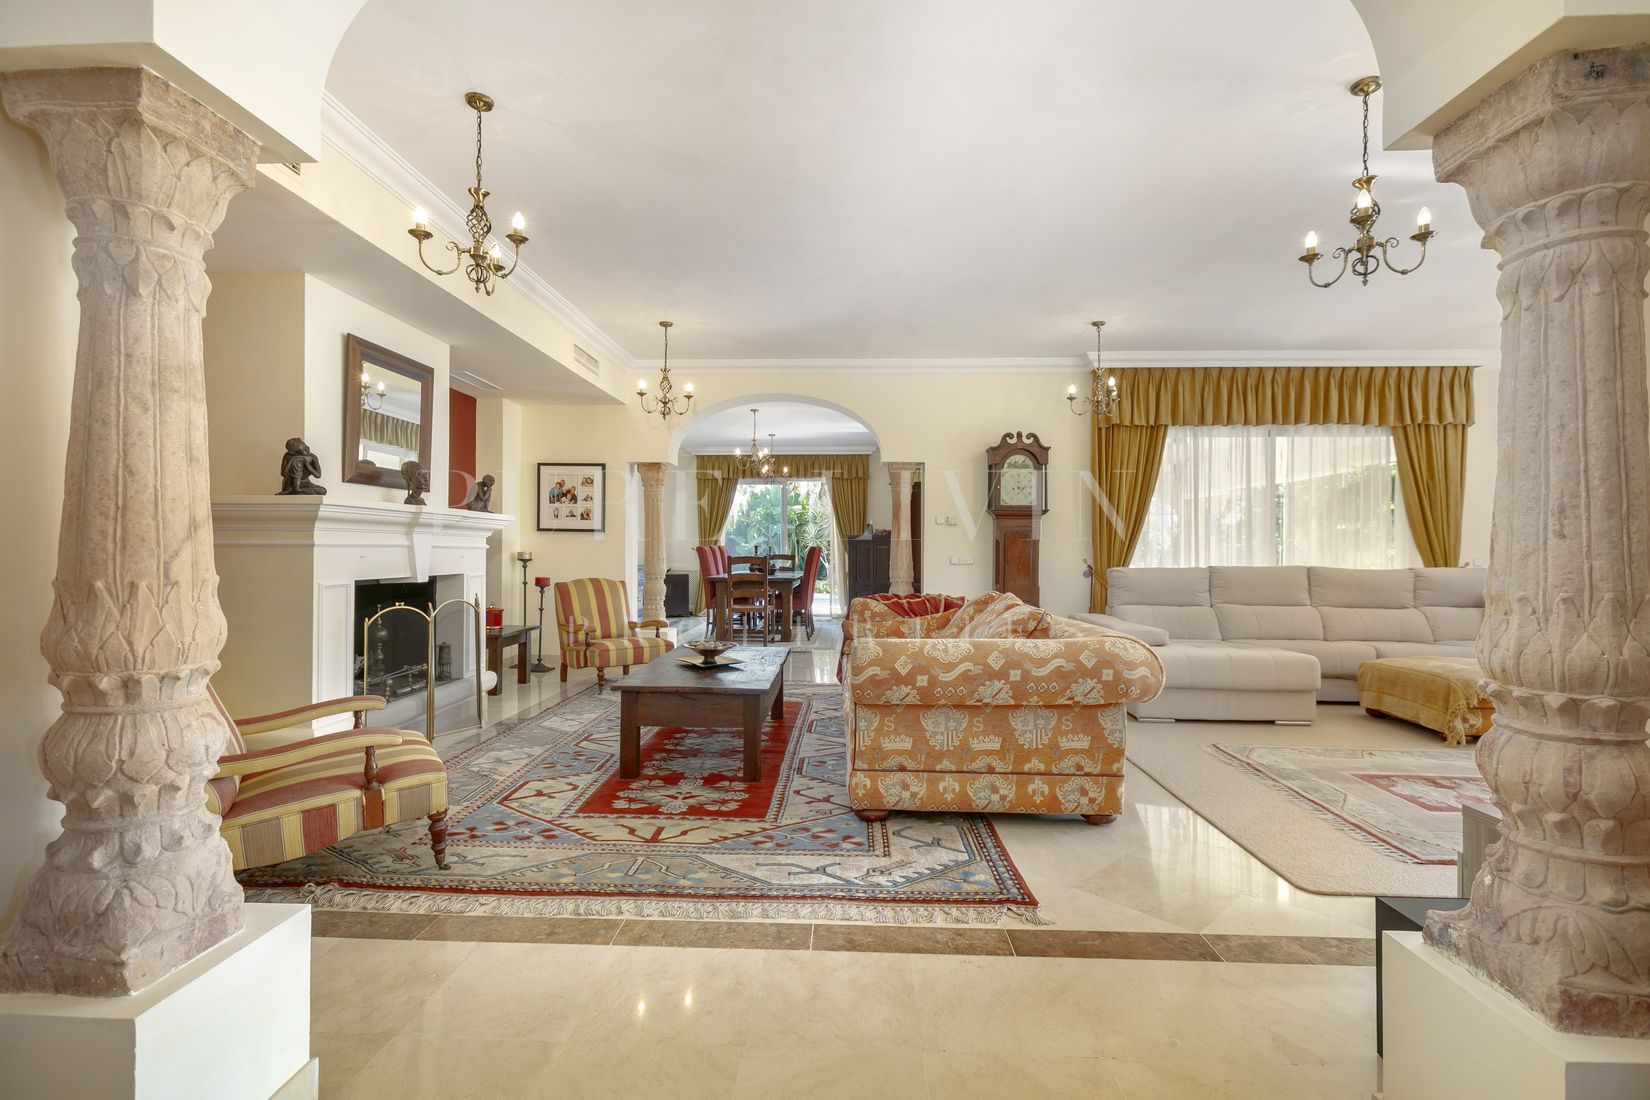 Magnificent four bedroom villa for sale with spectacular mountain views in El Herrojo, Benahavis.